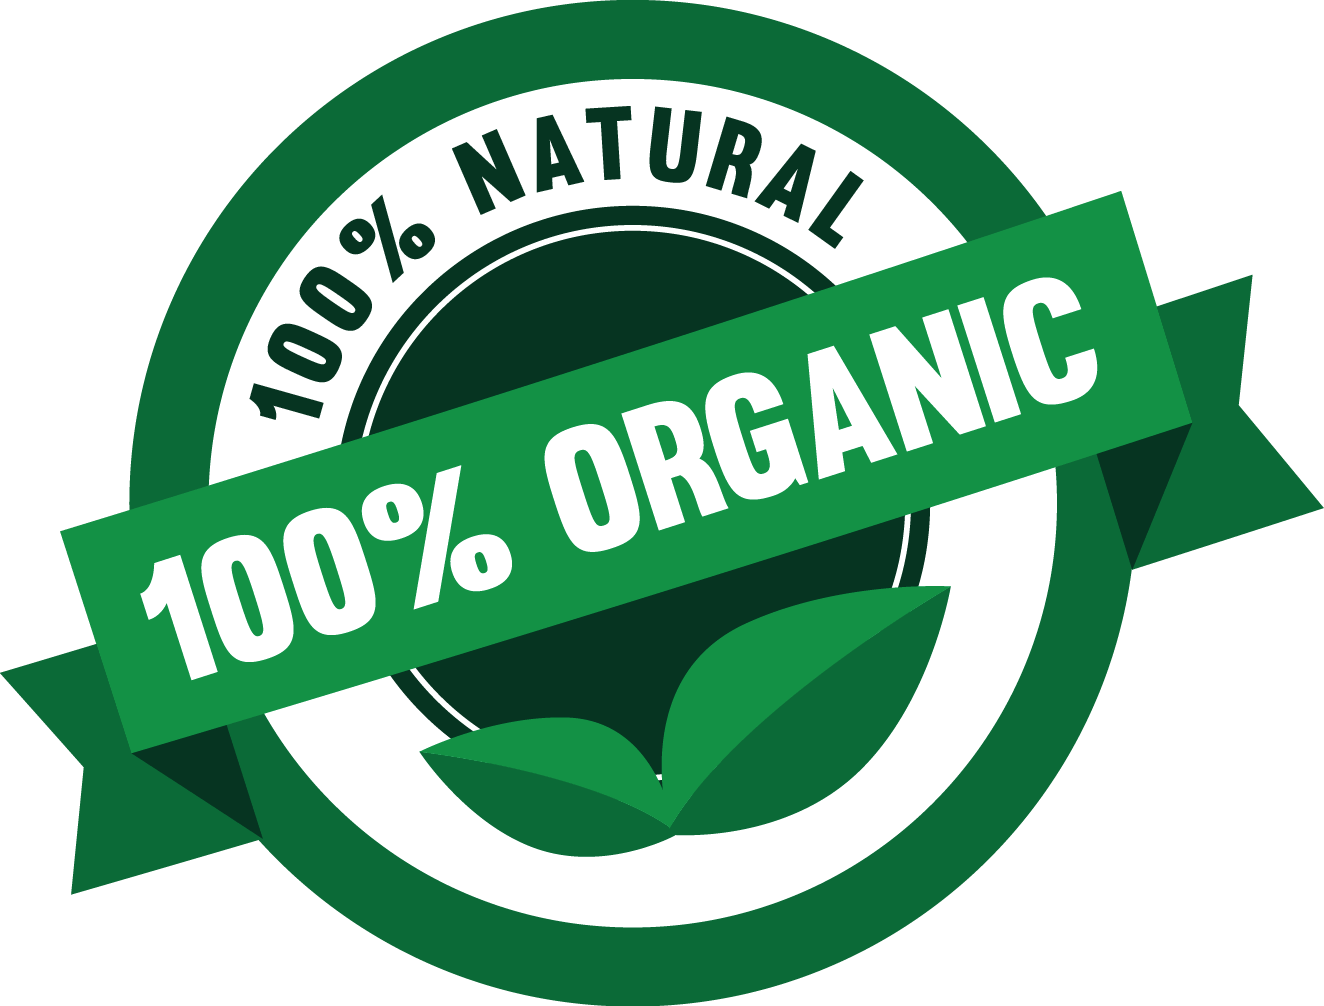 Natural ingredients 100 percent | Free SVG